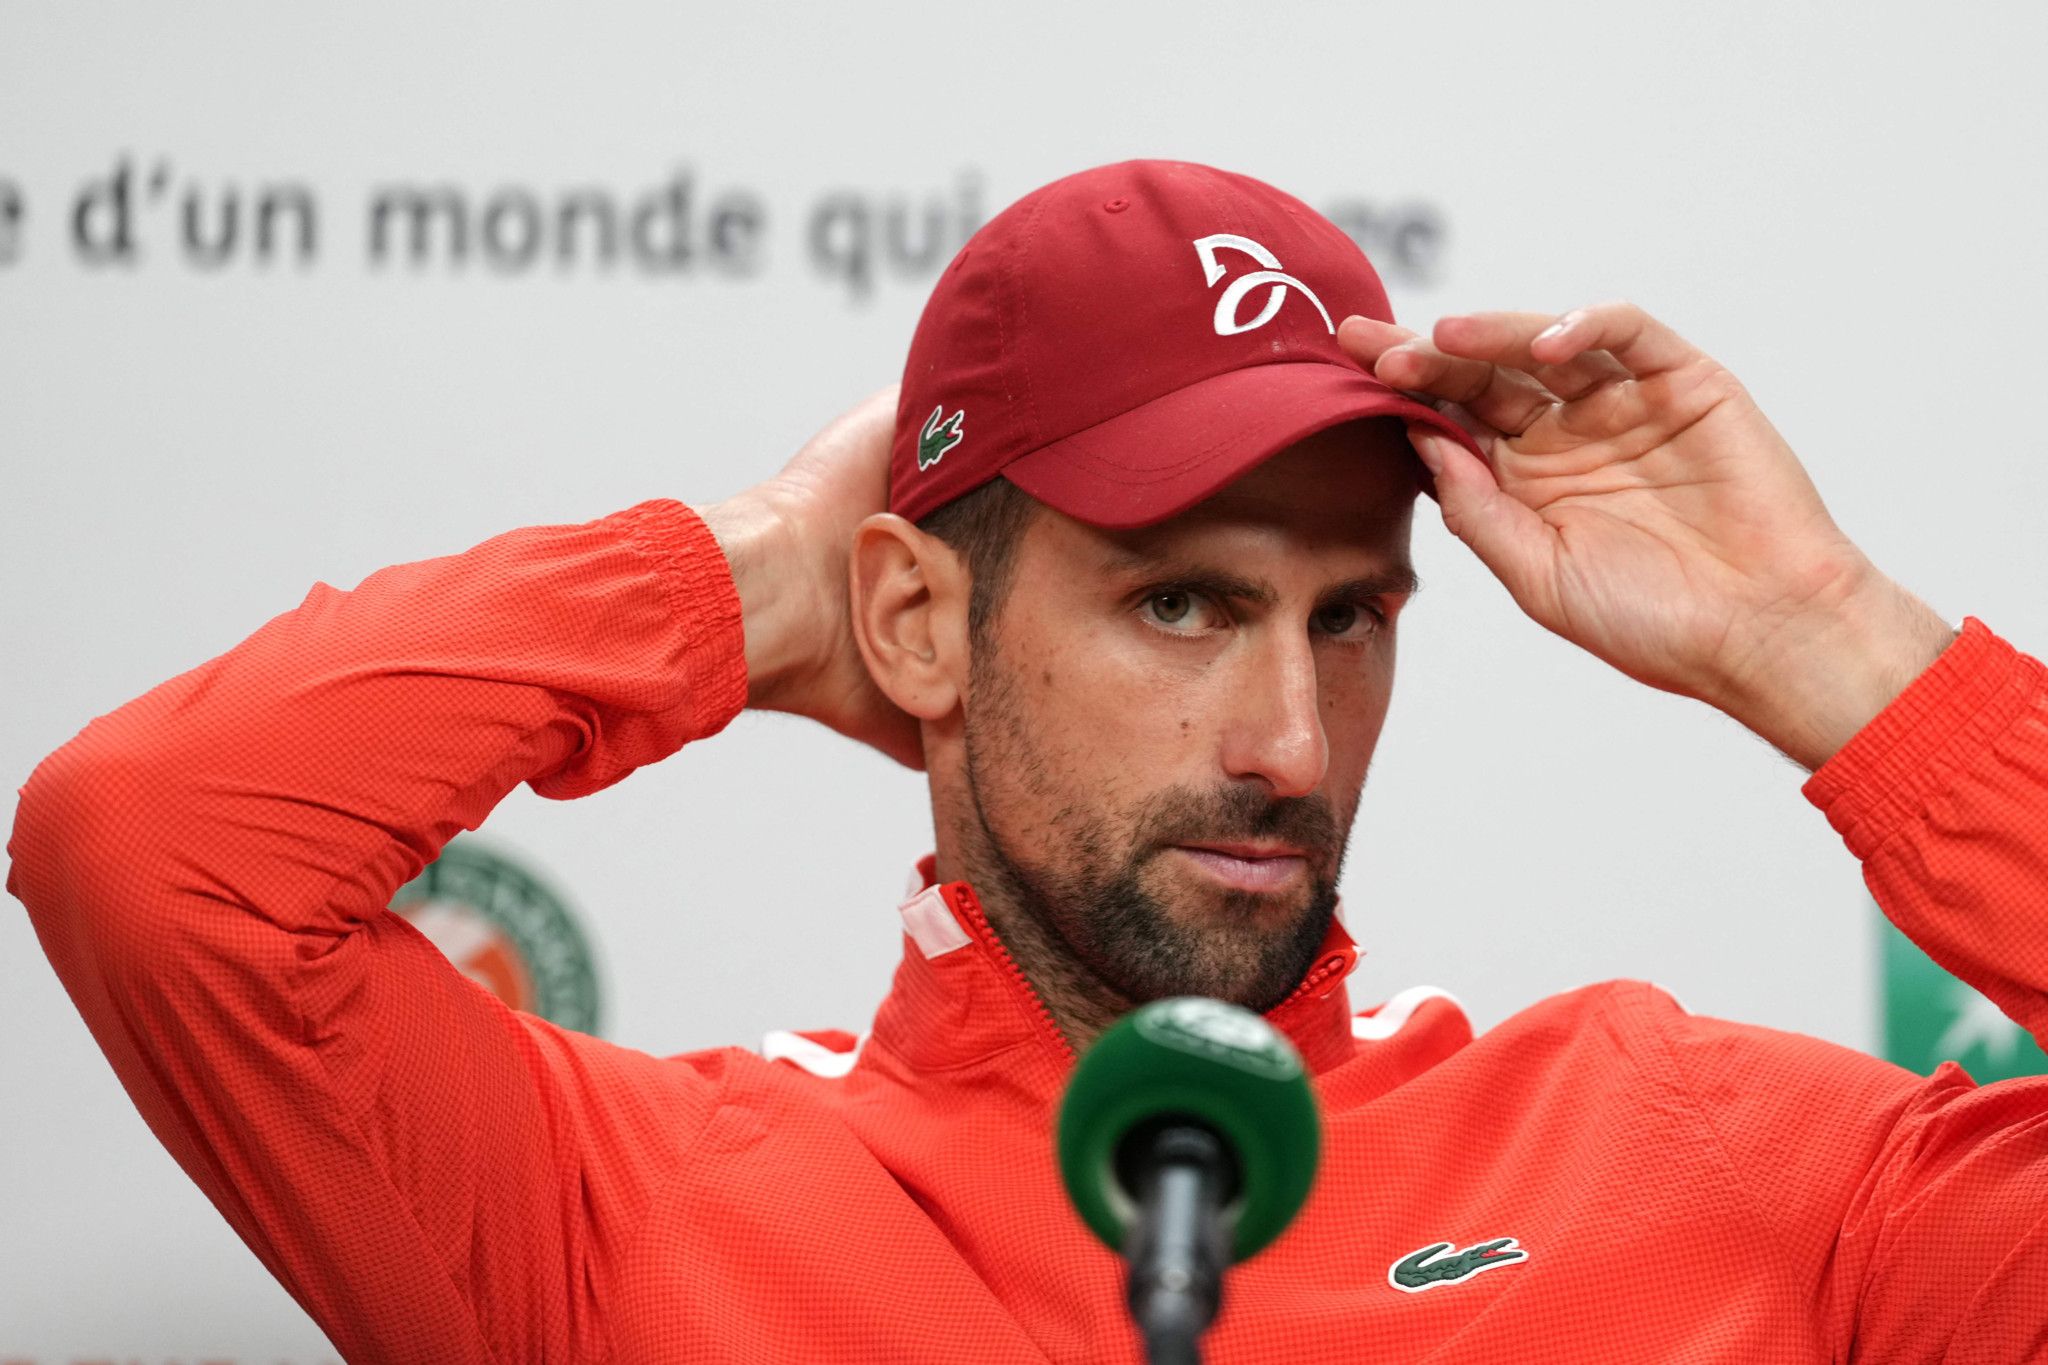 Blessé, Novak Djokovic déclare forfait